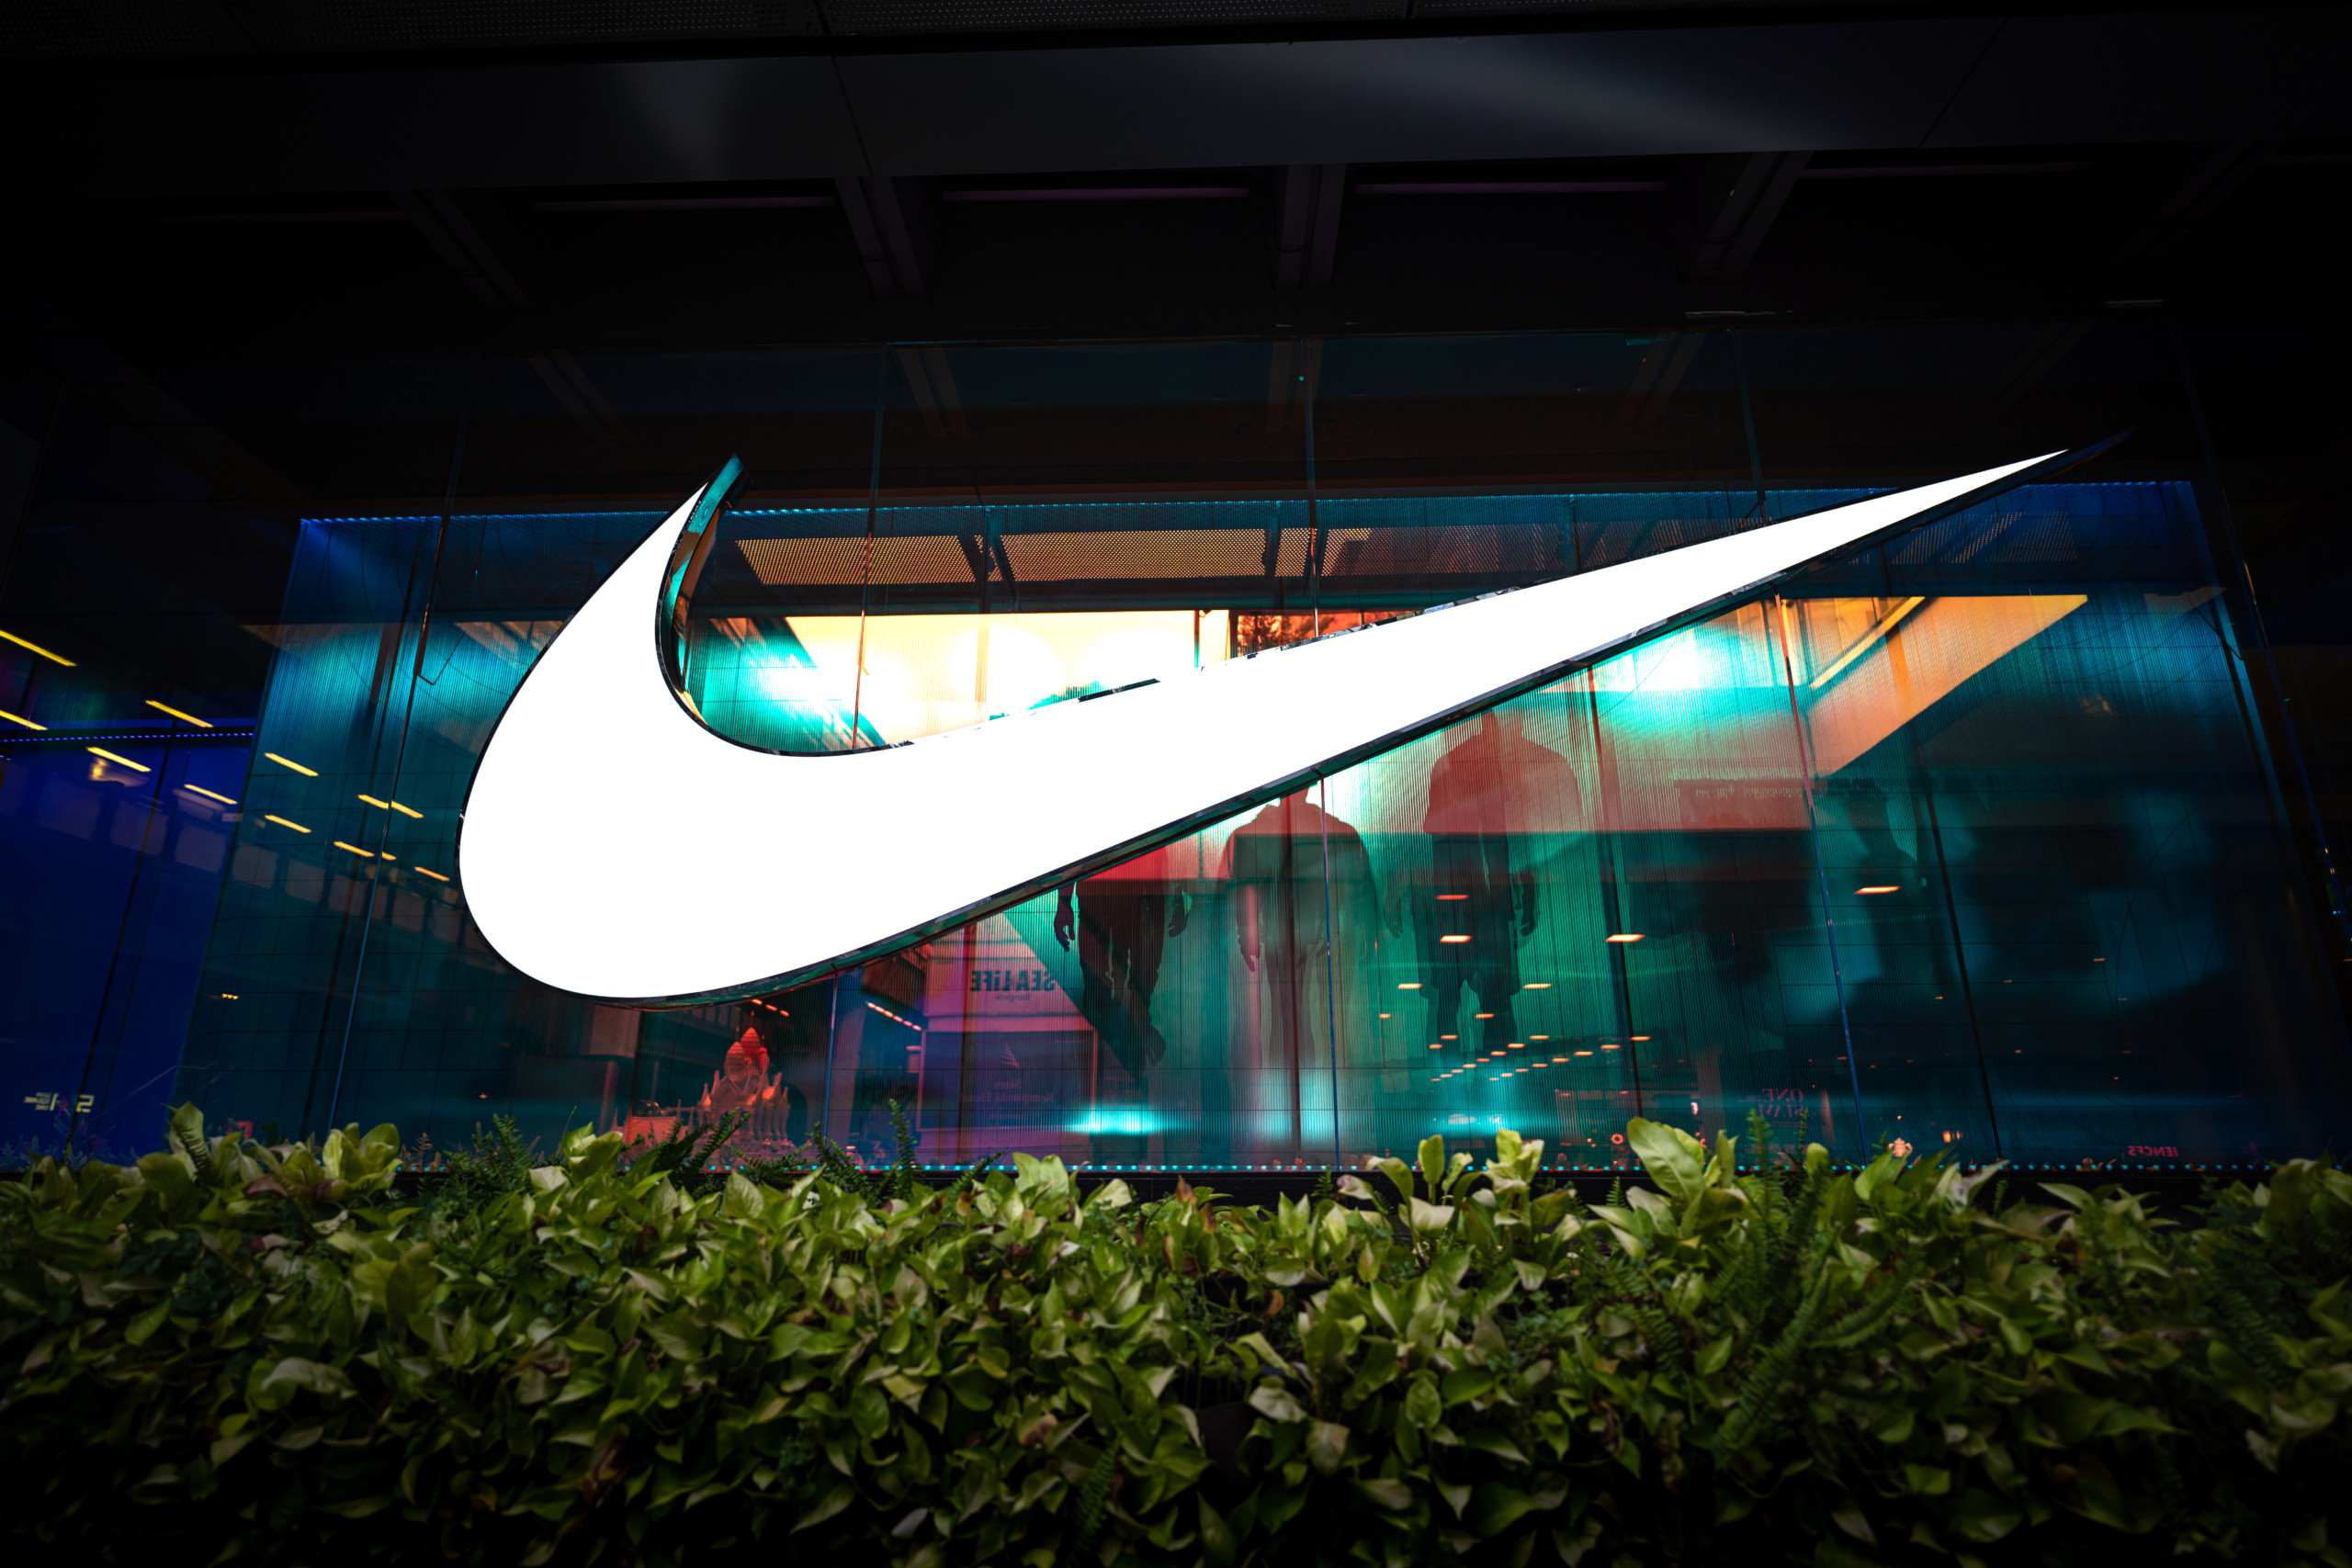 Nike verzeichnet Gewinnüberraschung trotz Umsatzrückgang - Direktvertriebsstrategie zeigt Erfolg